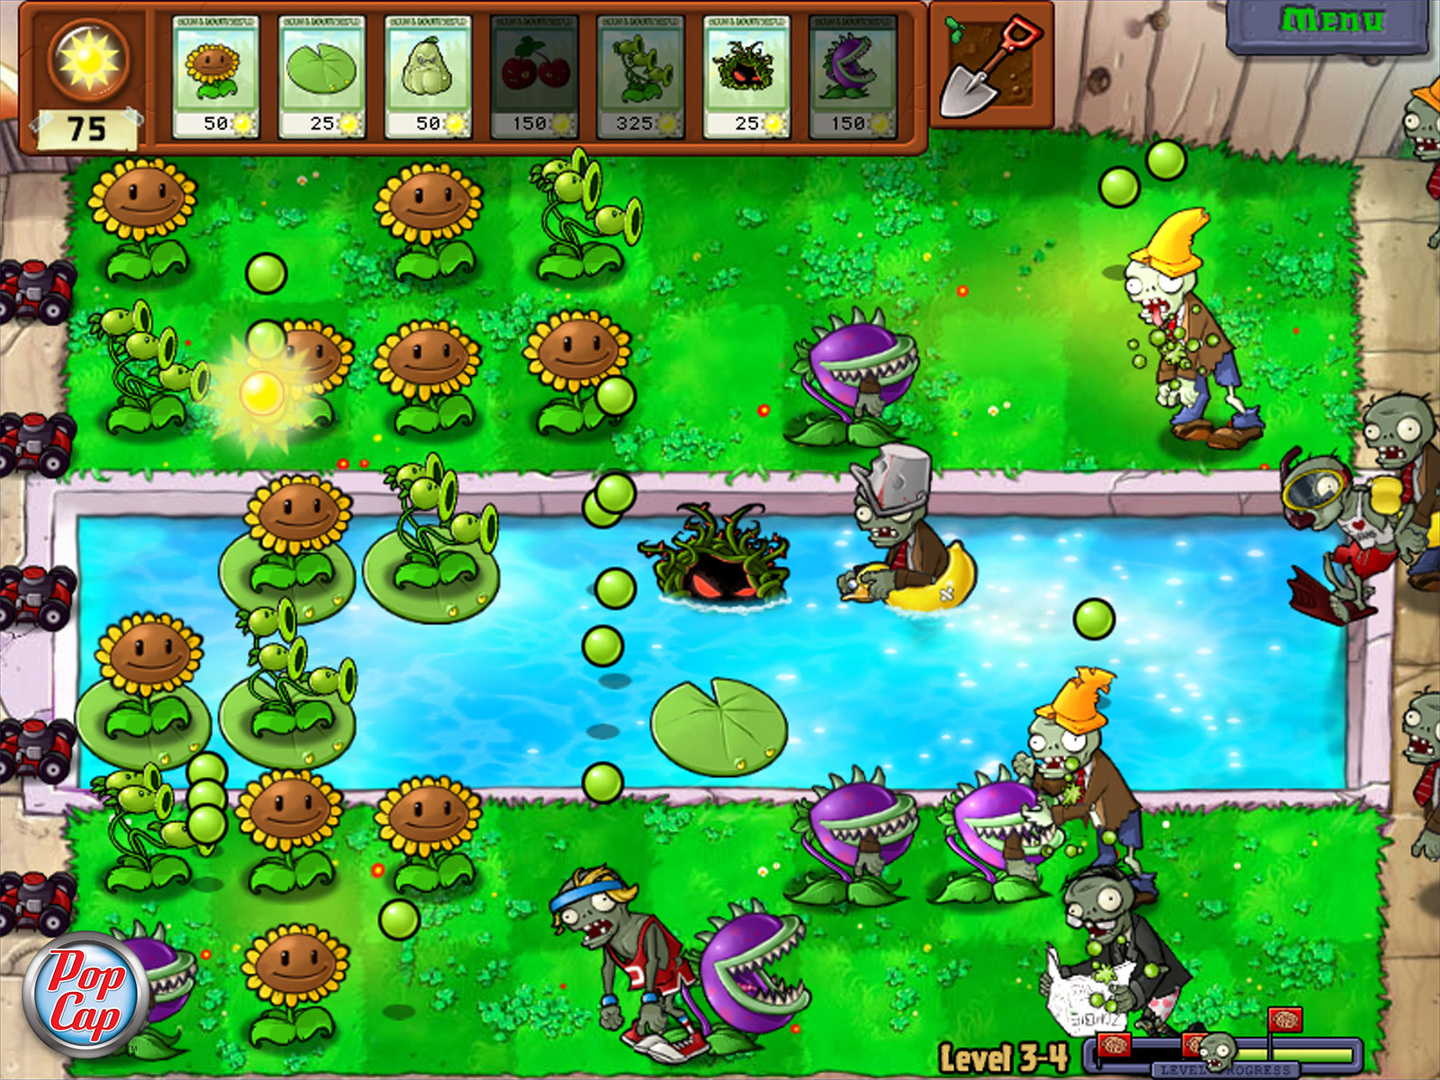 Plants vs Zombies: Garden Warfare crops up on PC